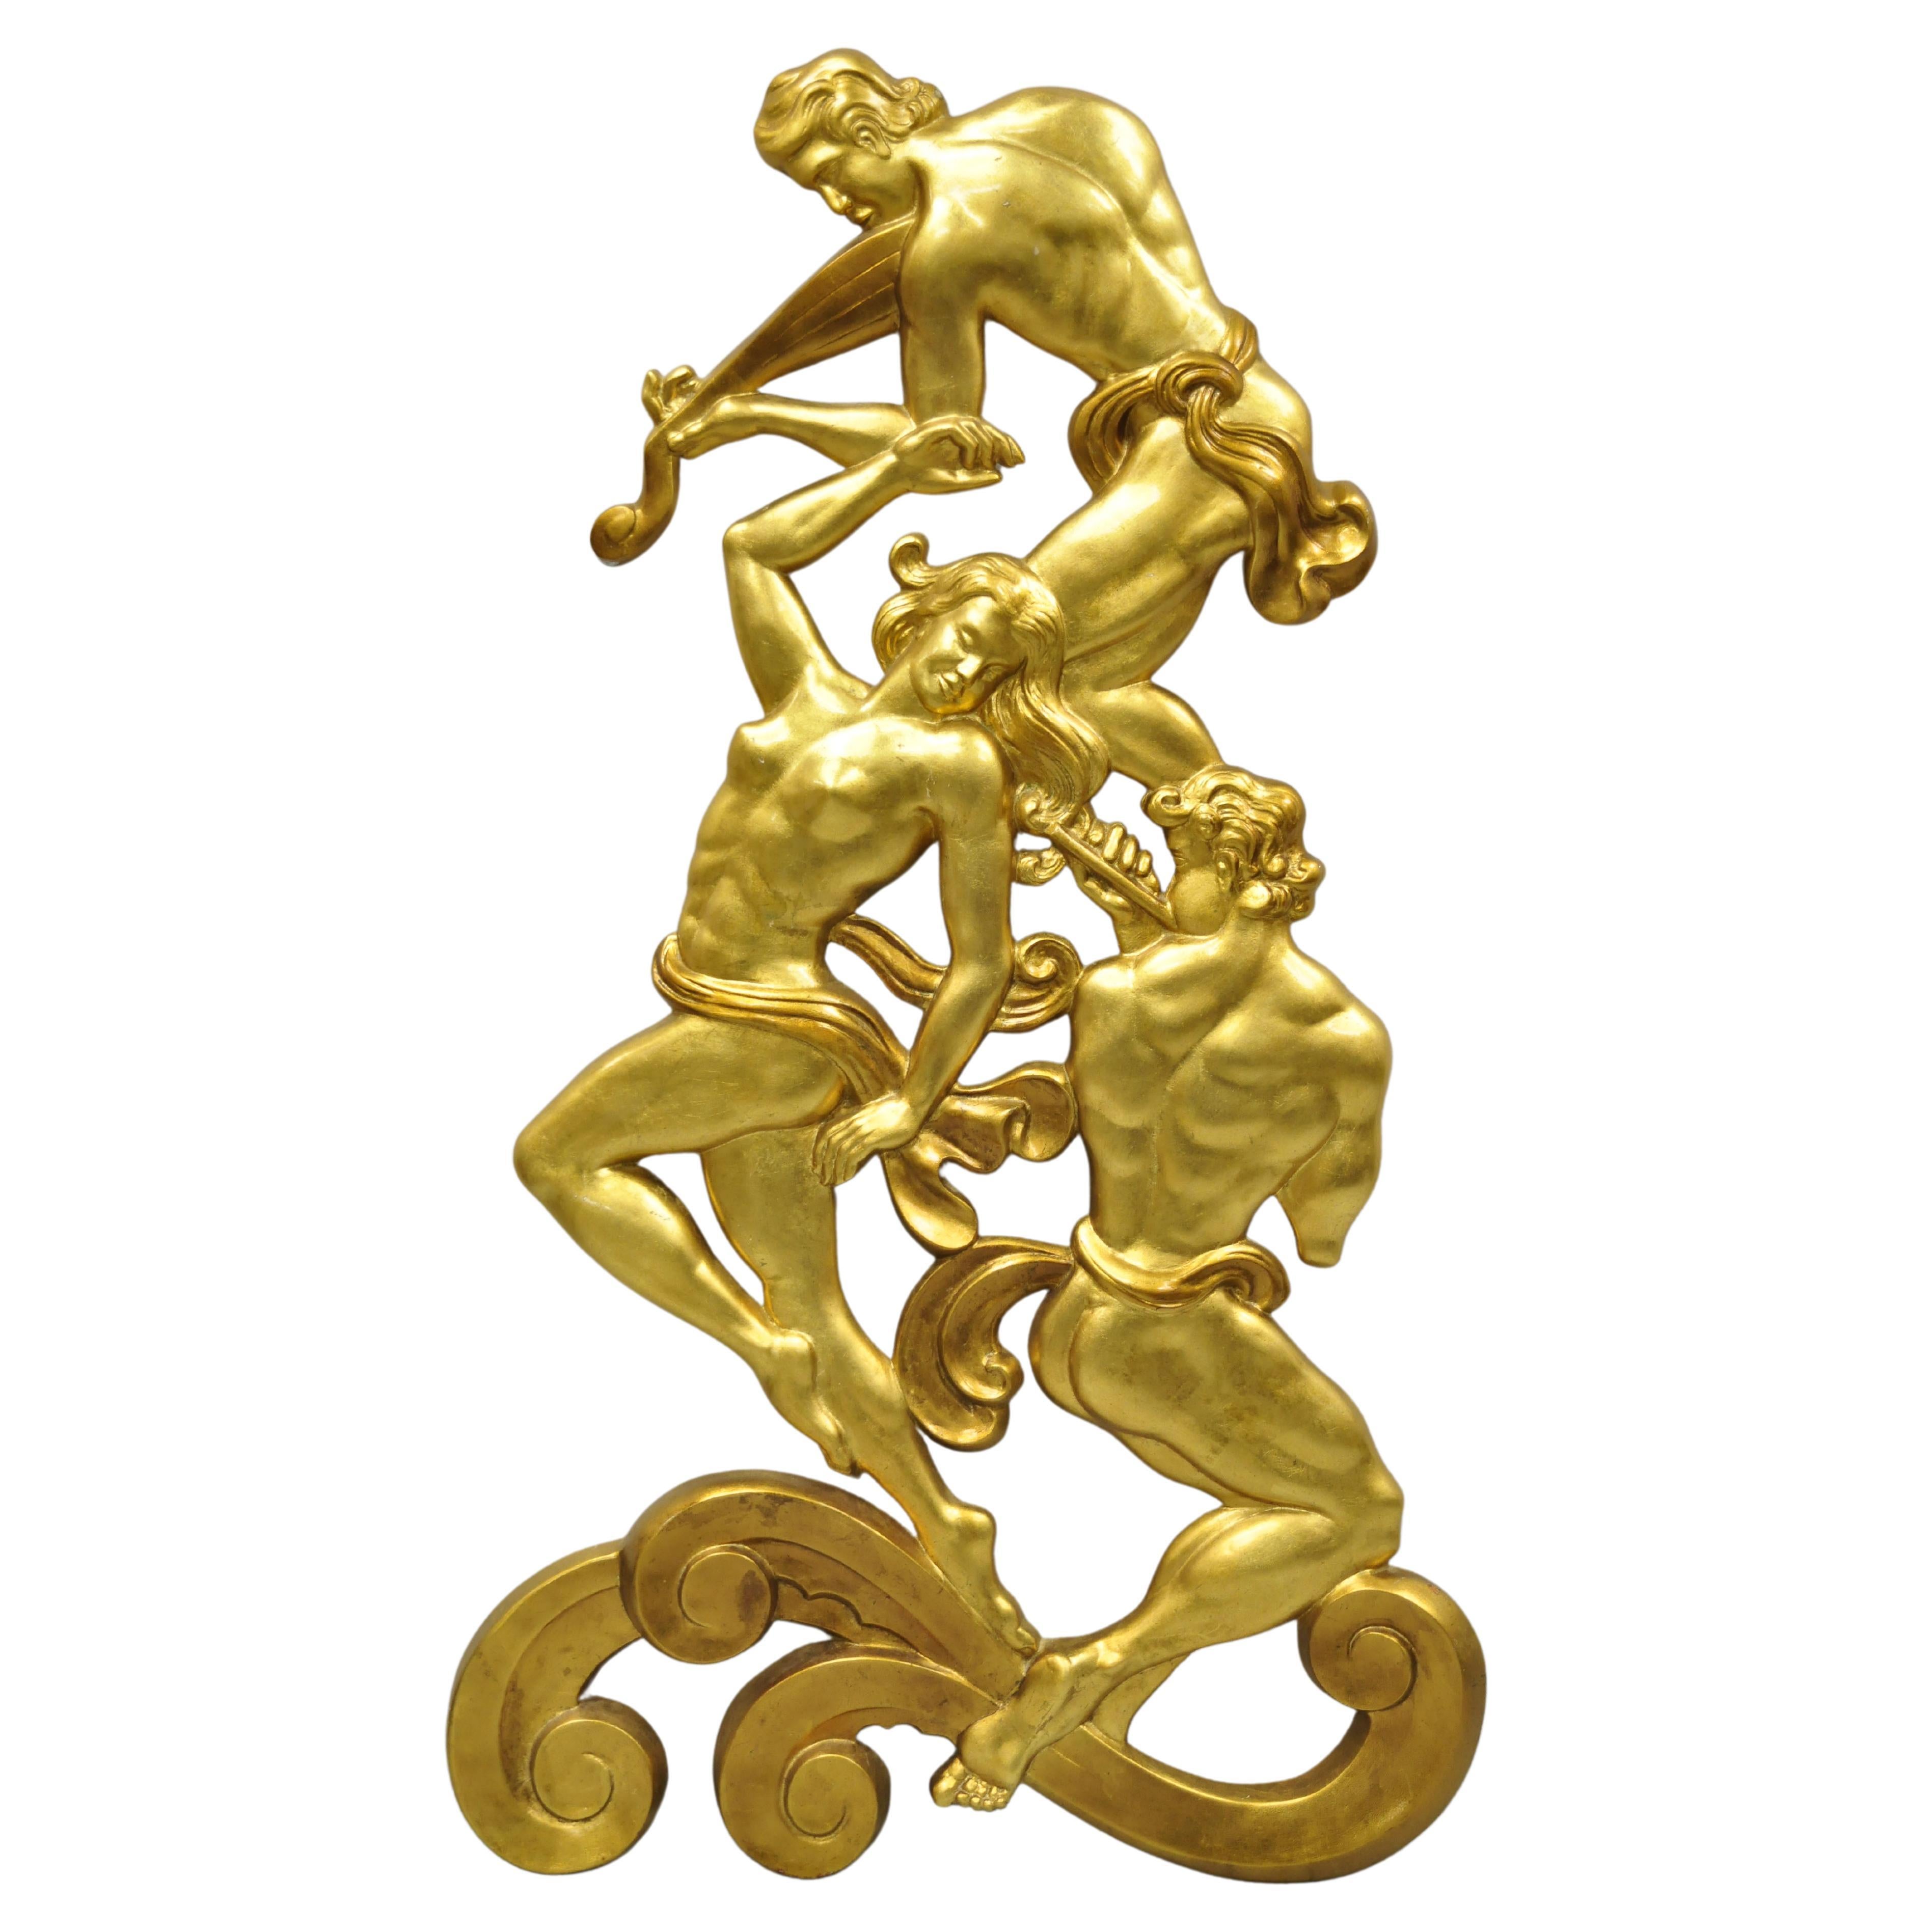 Vtg Large Gypsy Gold Art Deco Fiberglass Figural Sculpture Rockefeller Center